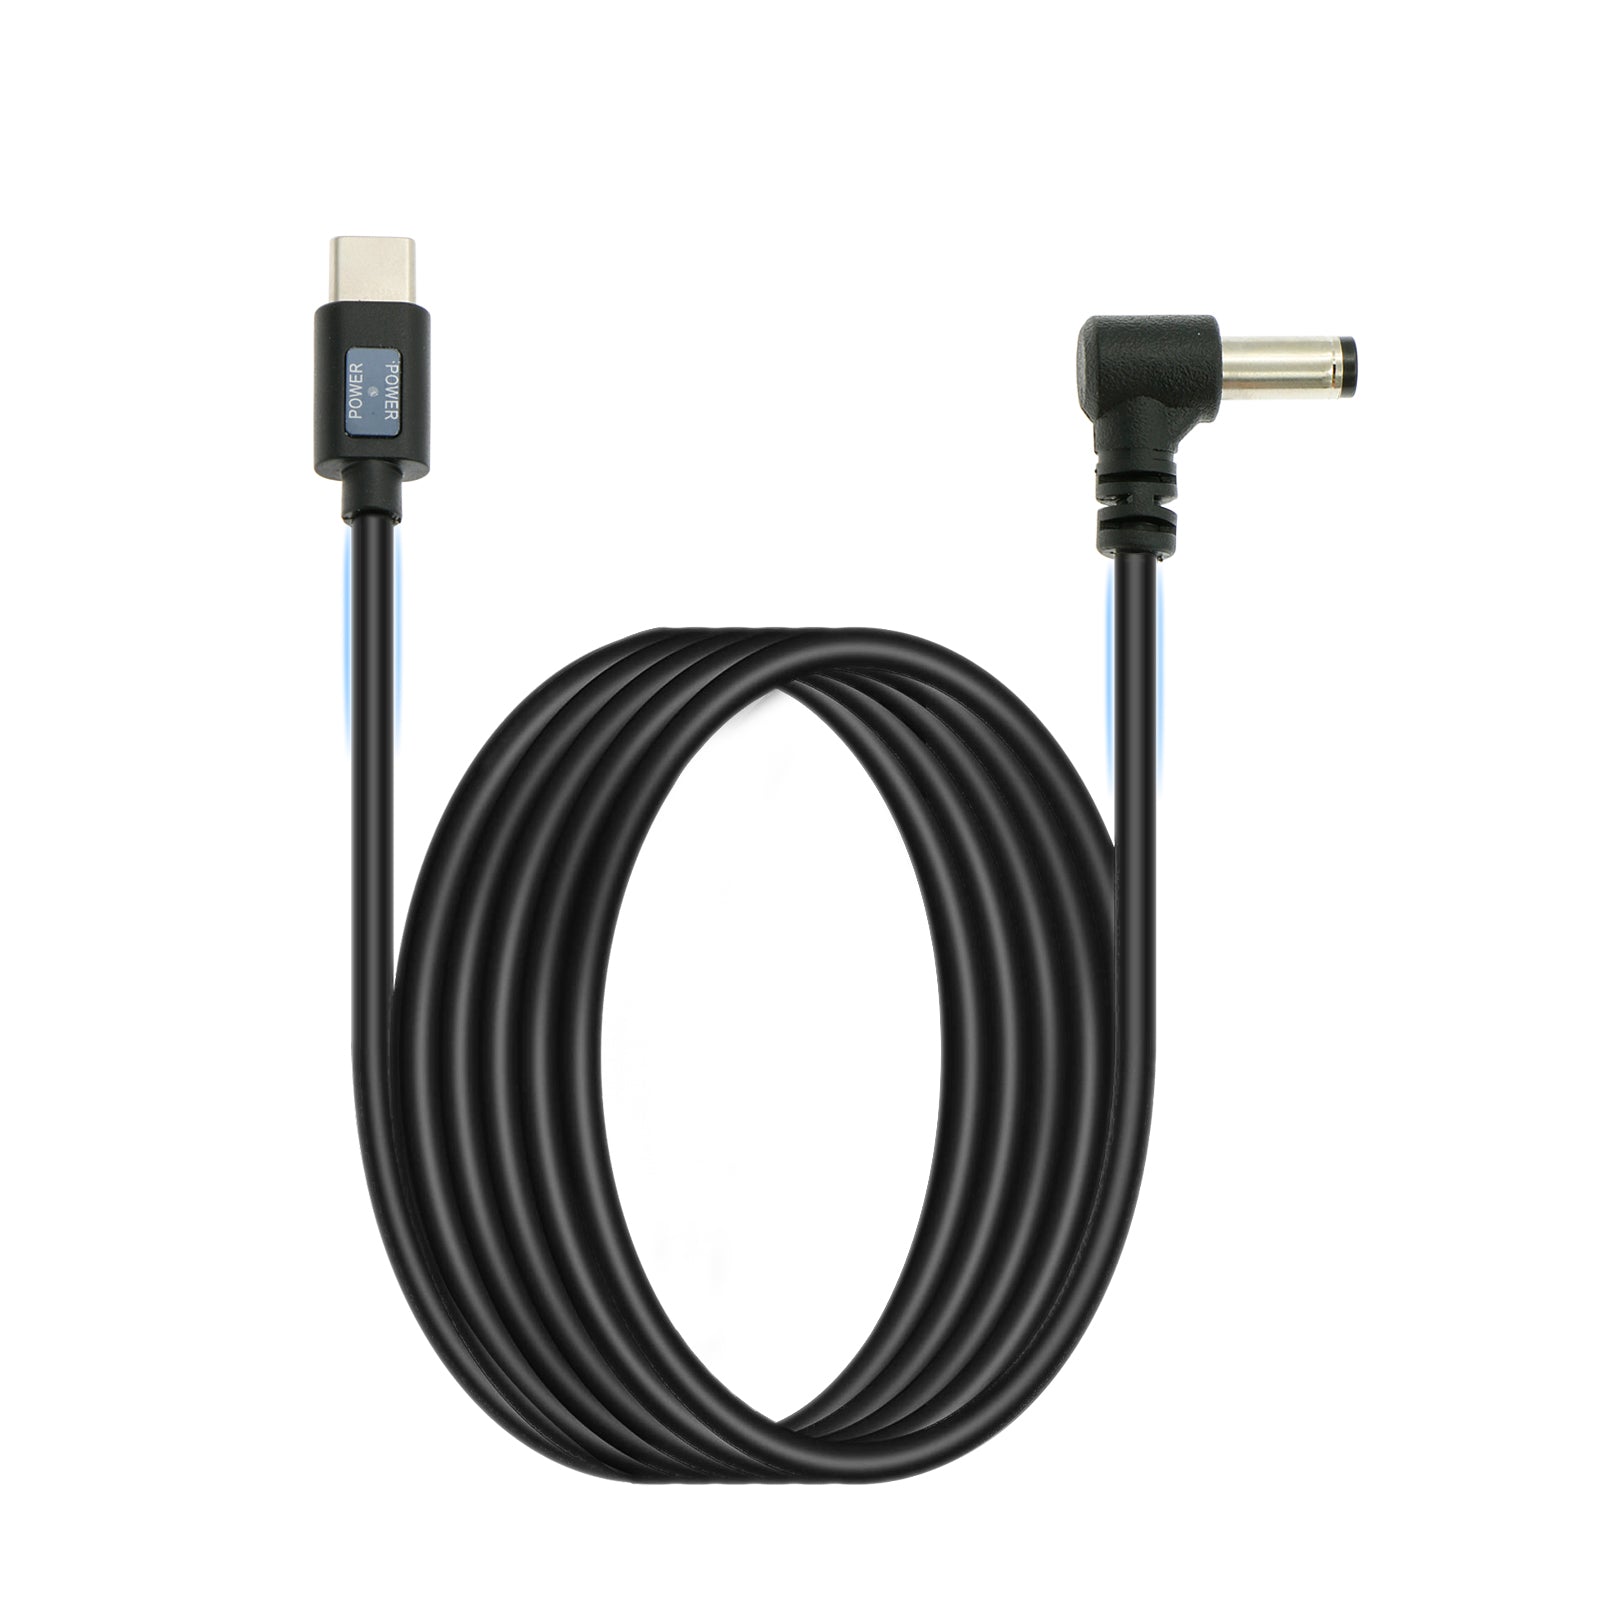  BoxWave Cable Compatible with Marshall Emberton II - DirectSync  - USB 3.0 A to USB 3.1 Type C, USB C Charge and Sync Cable for Marshall  Emberton II - 6ft - Black : Electronics